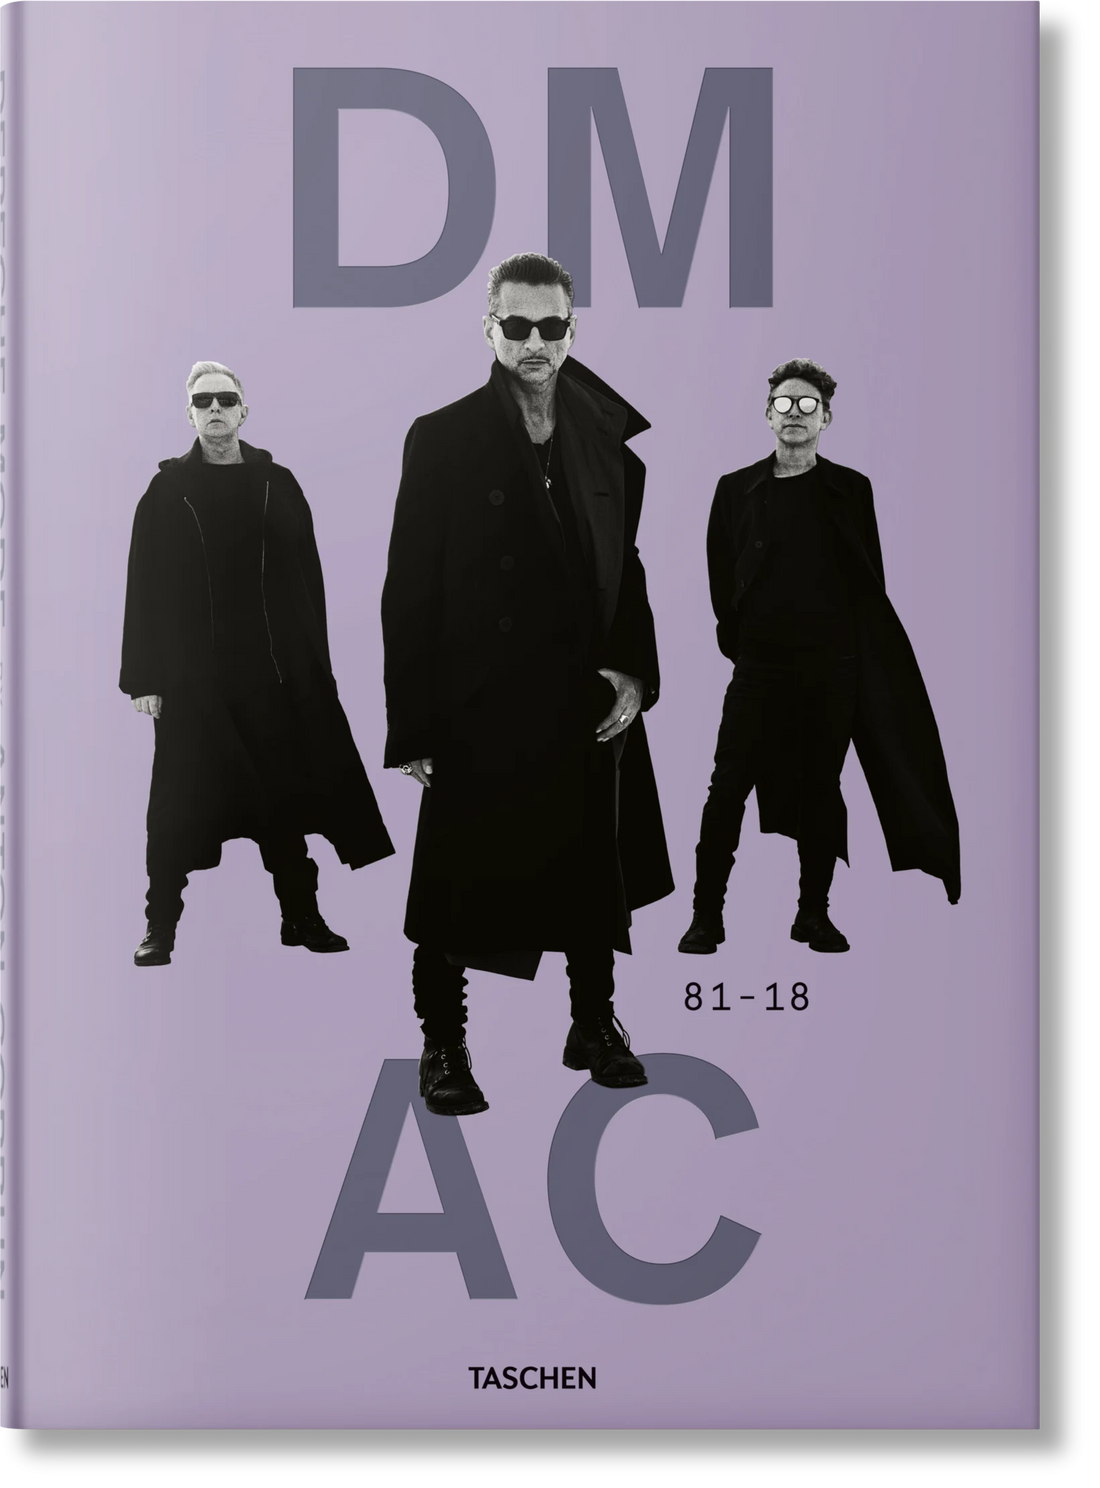 Taschen - Depeche Mode by Anton Corbijn